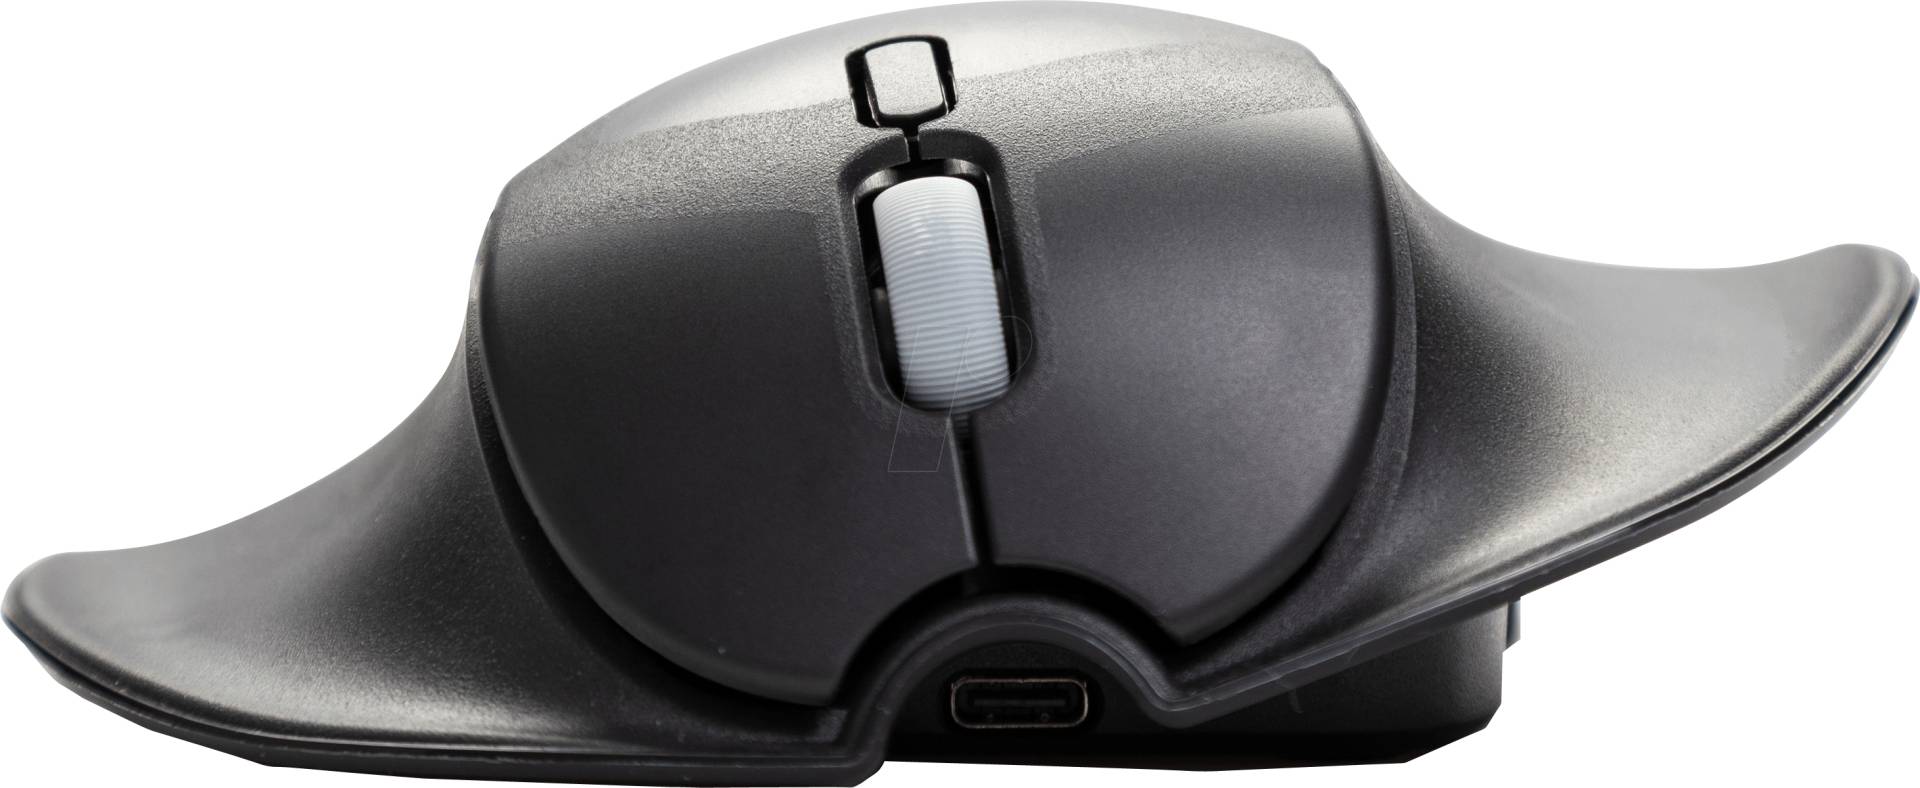 HSM SHIFT-L - Maus (Mouse), Bluetooth, ergonomisch, groß (L) von HANDSHOEMOUSE